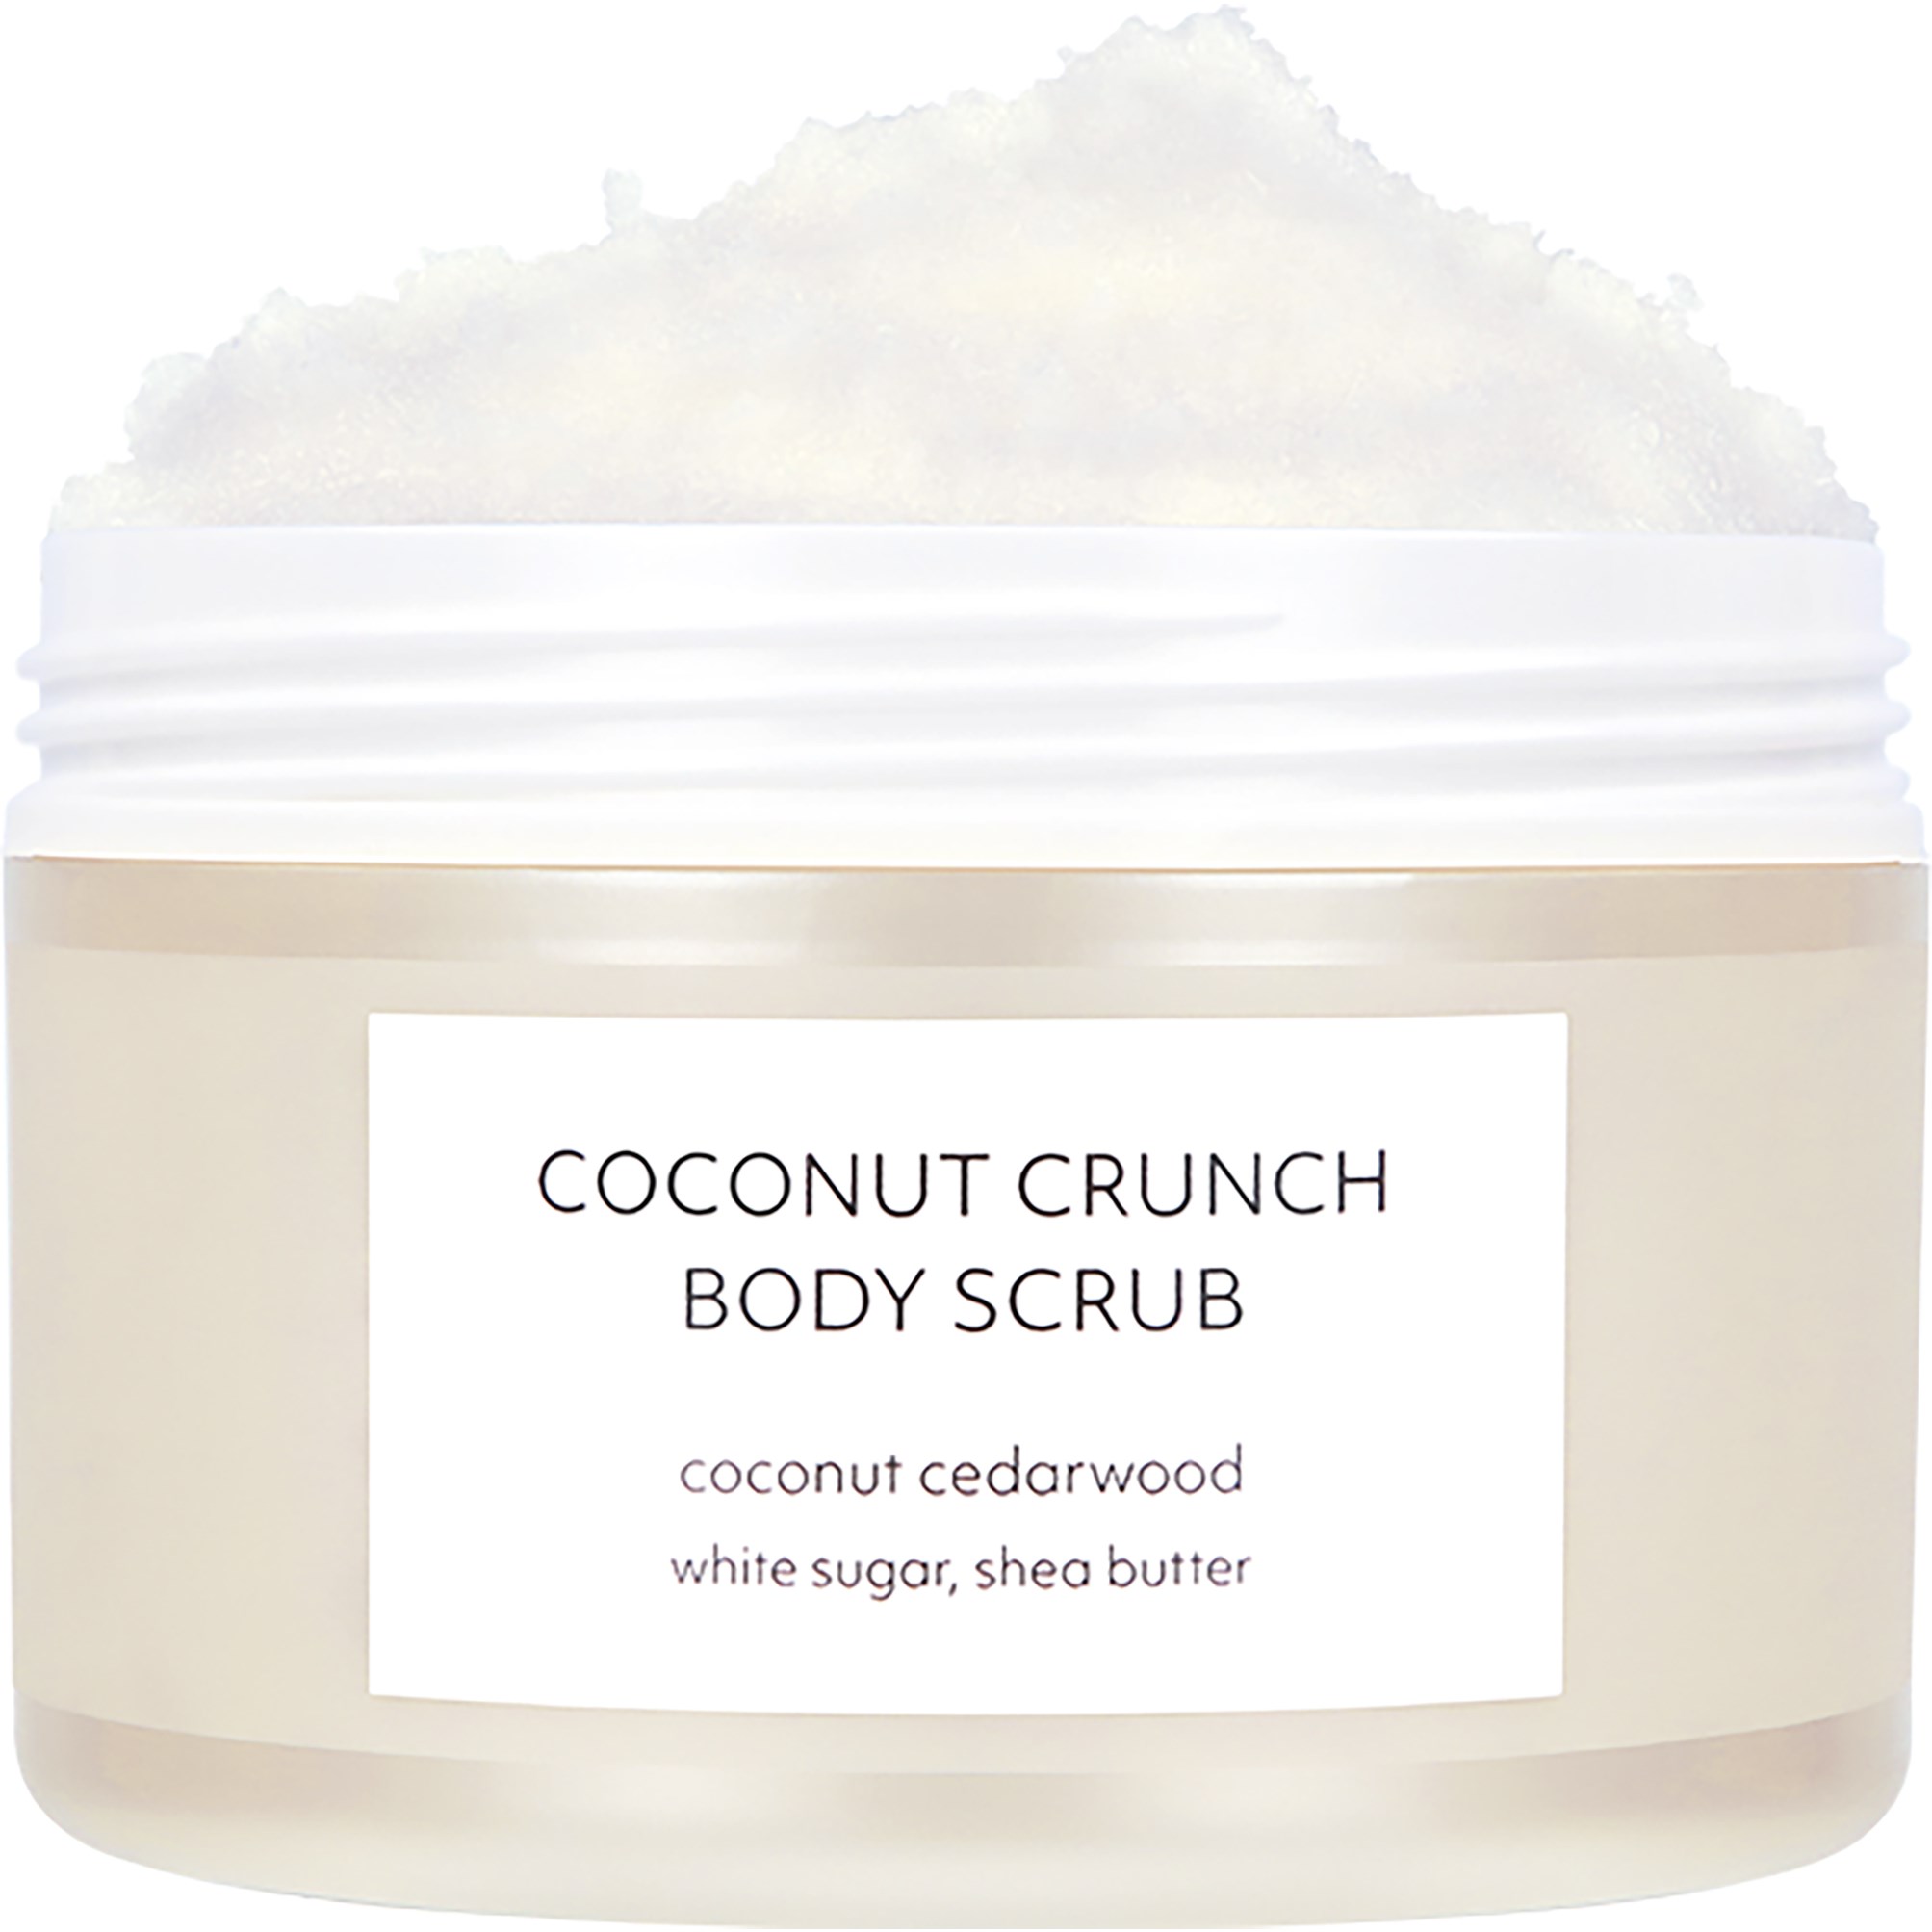 Bilde av Estelle&thild Organic Beauty Coconut Cedarwood Coconut Crunch Body Scr